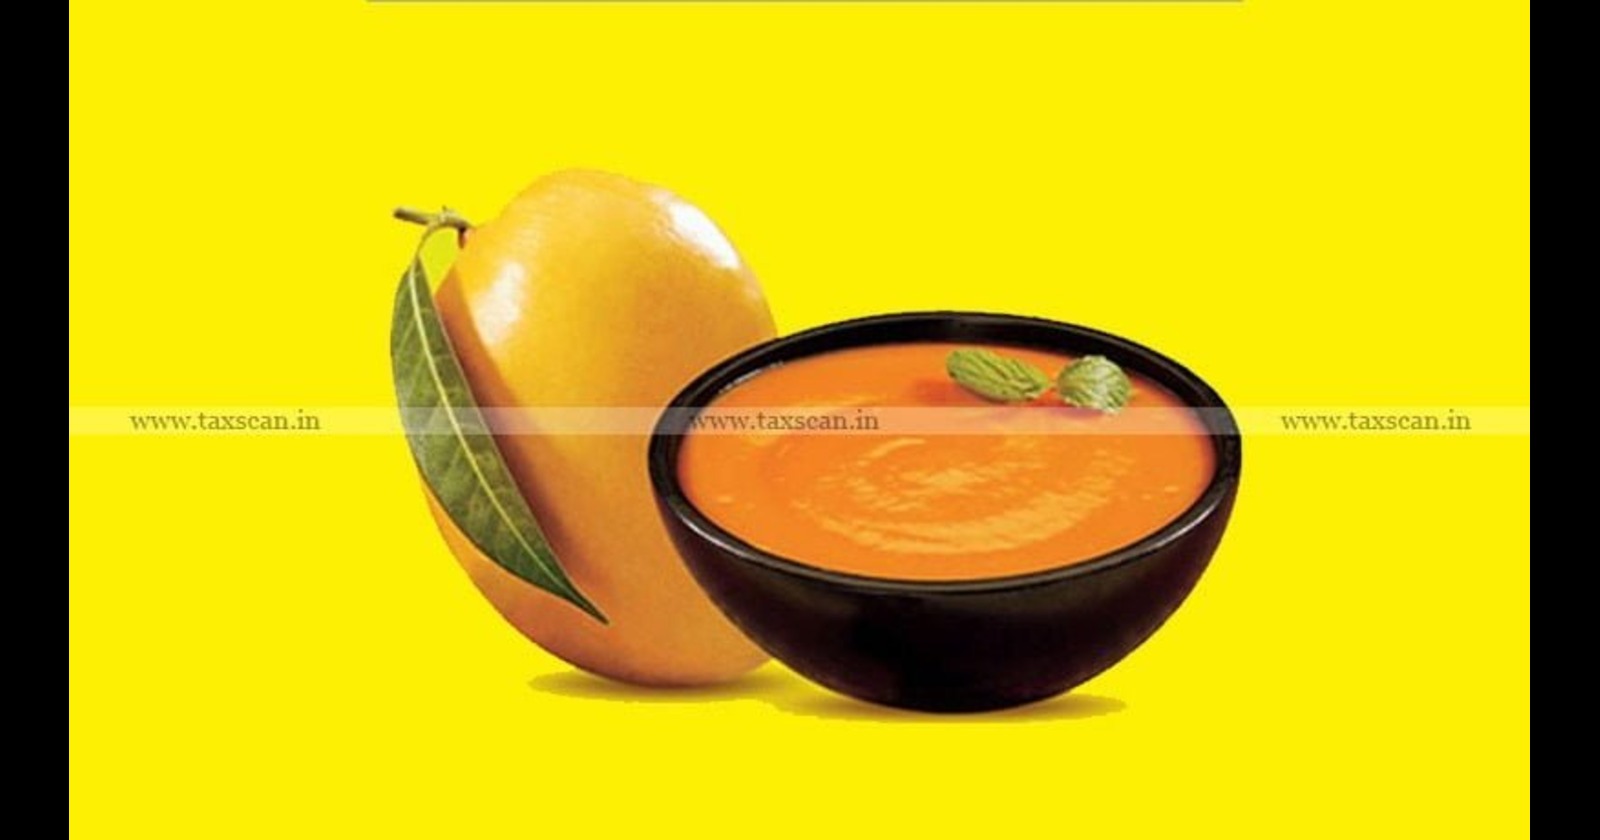 Export - mango pulp - attracts - GST - Gujarat HC - taxscan